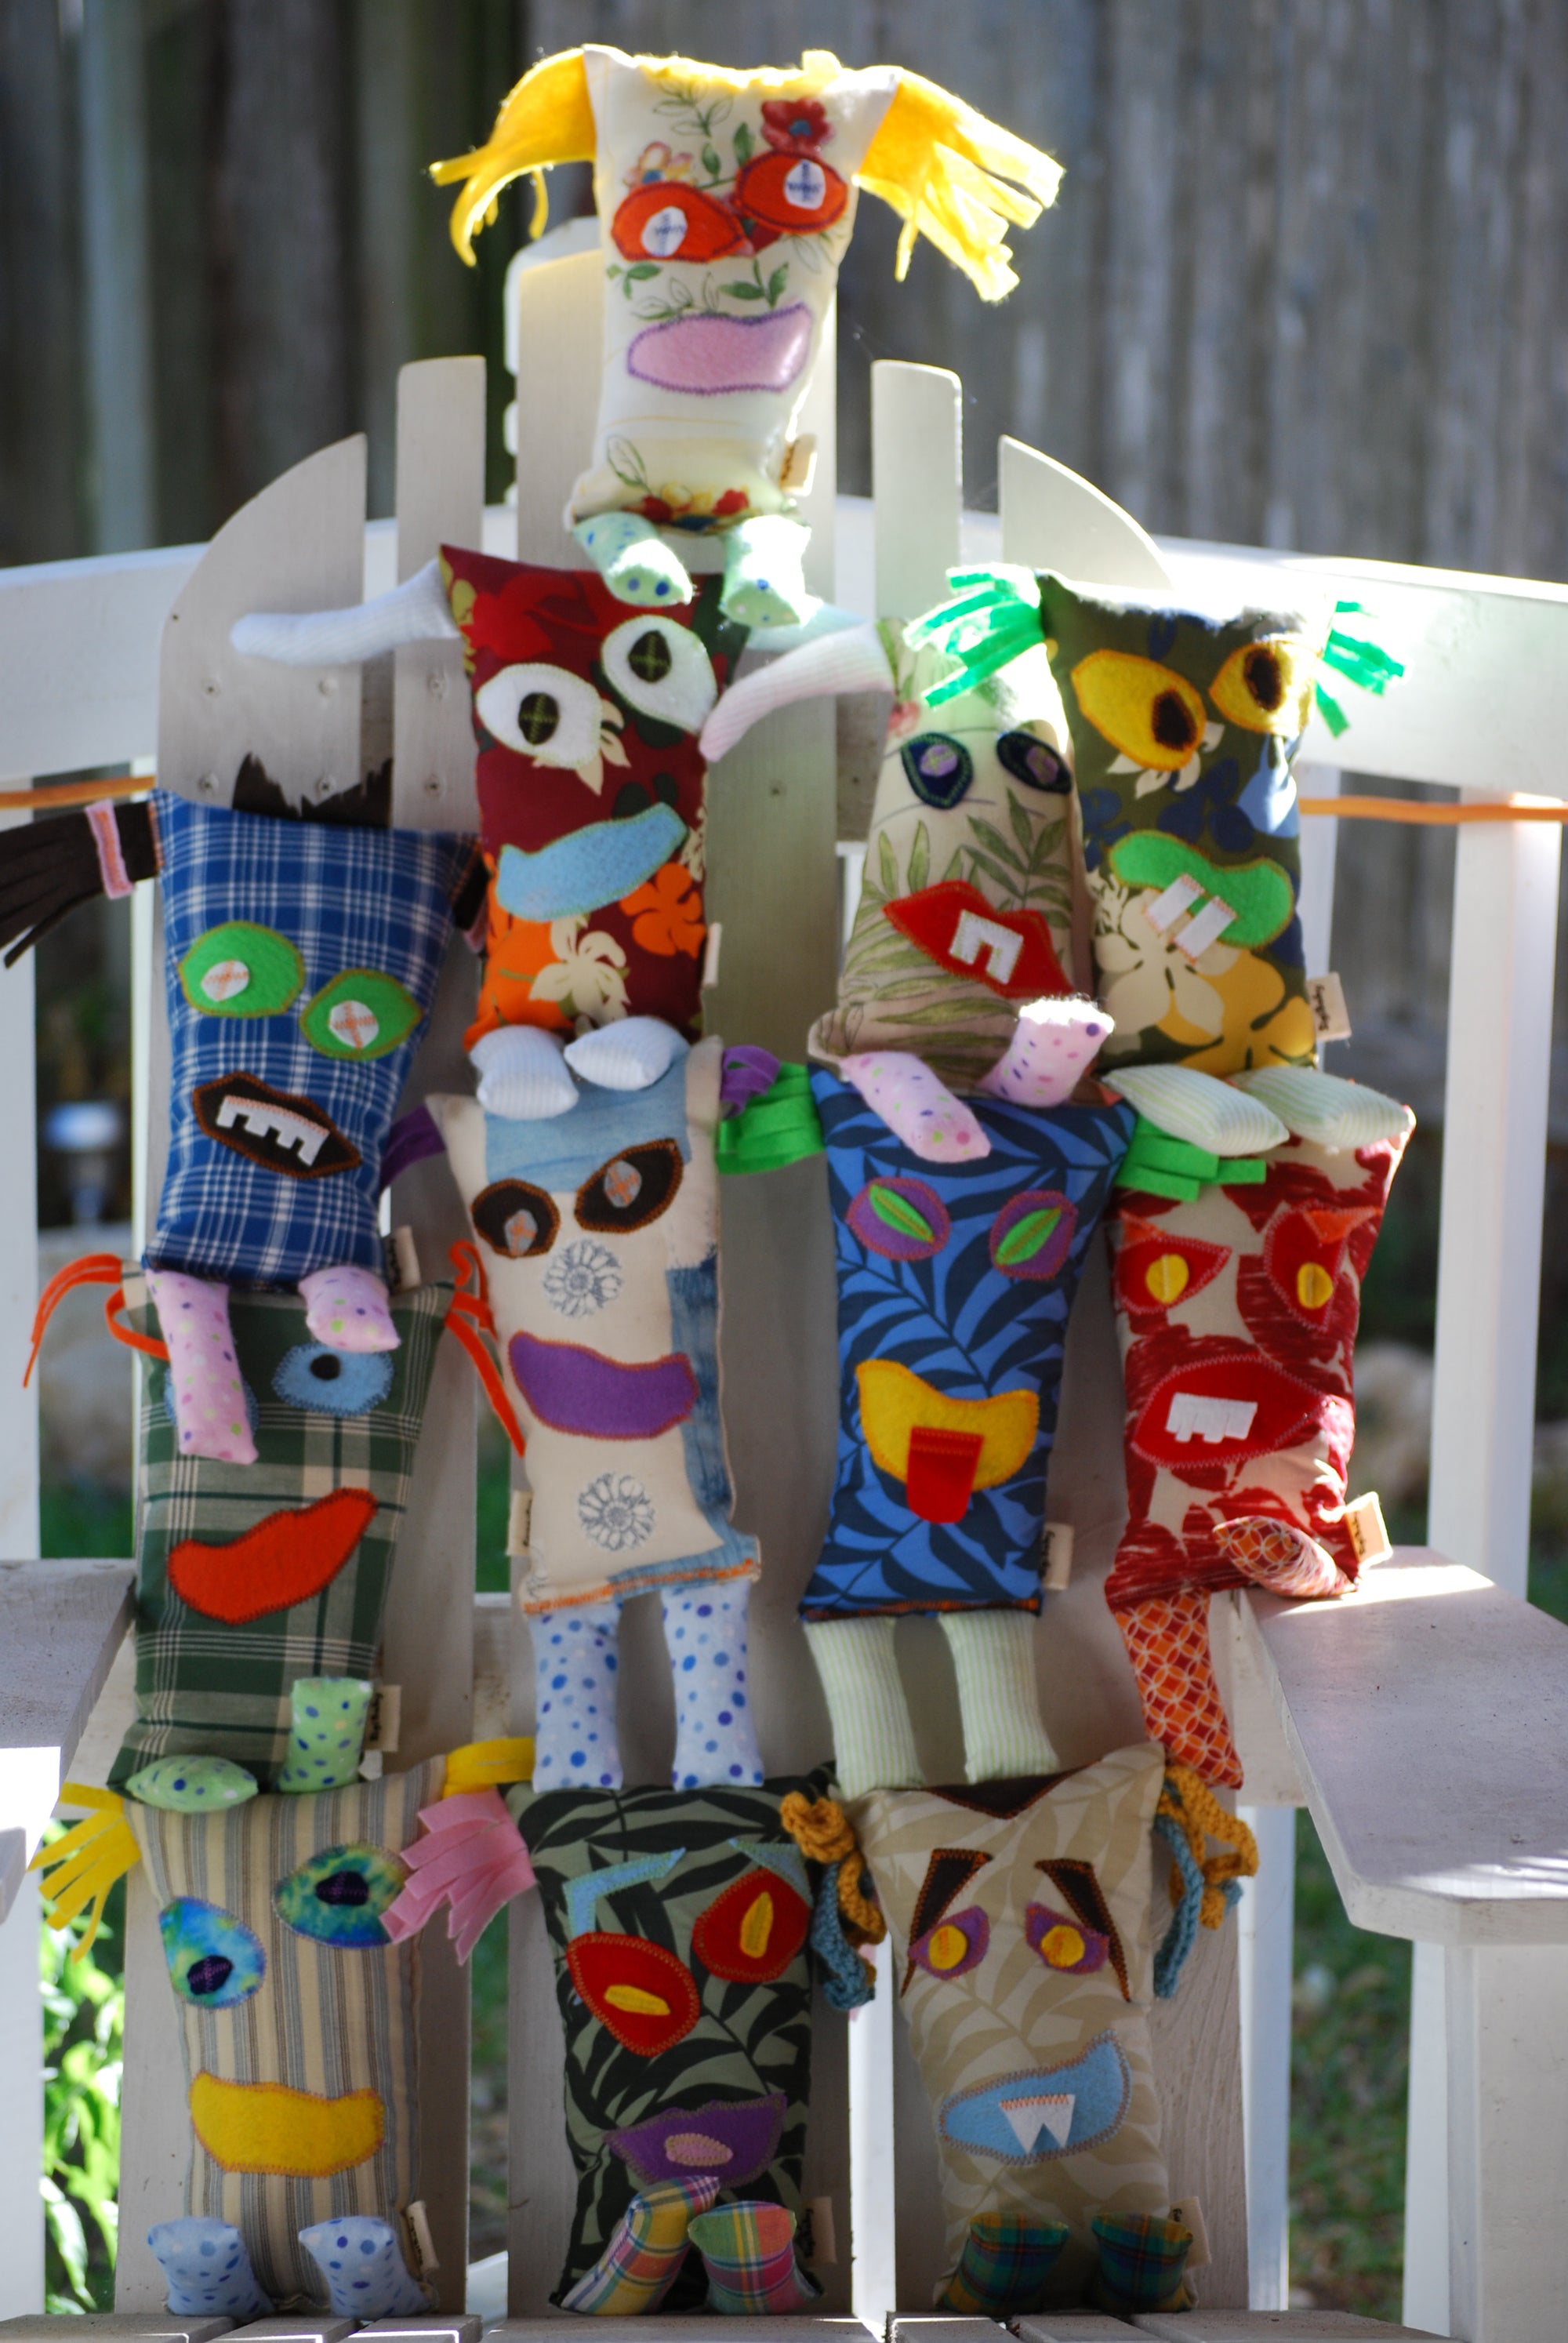 Little Monster "Gretel" Handmade Recycled Fabric Plush Toy Doll